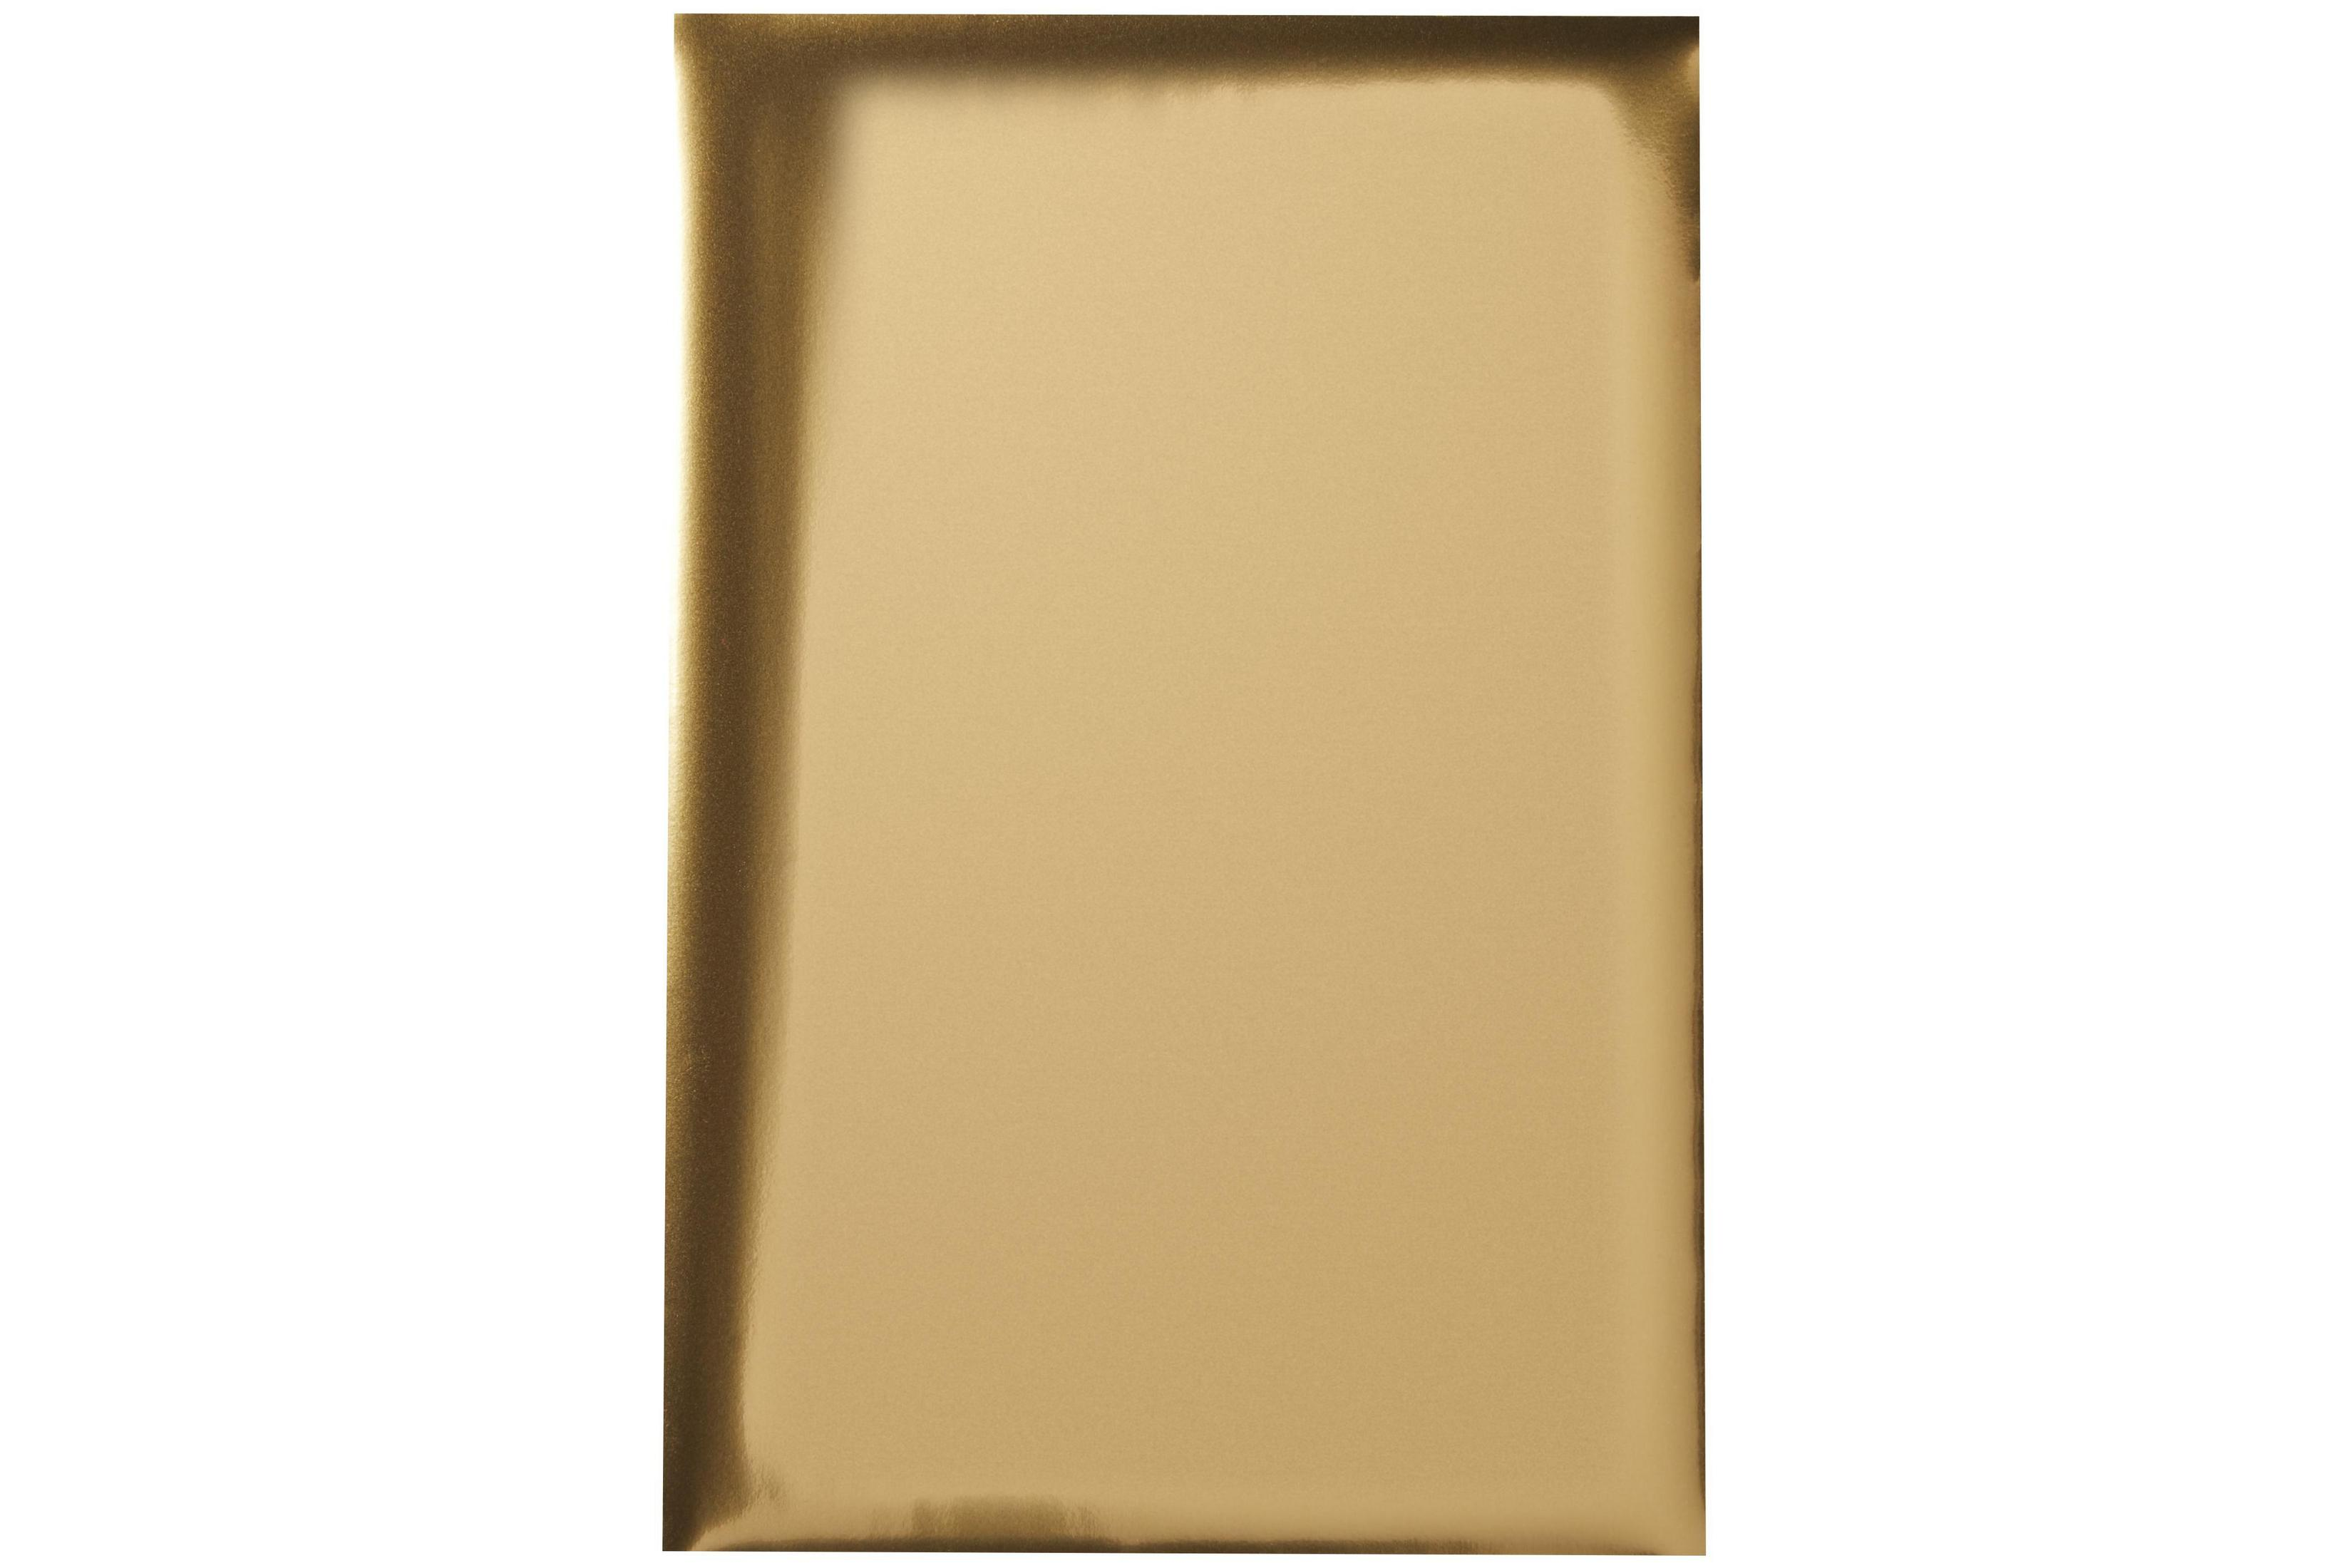 MET 10X15 SHEETS Gold/Silber/Rotgold CRICUT Transferfolie 2008716 24 FOIL SHEETS SAMPLER